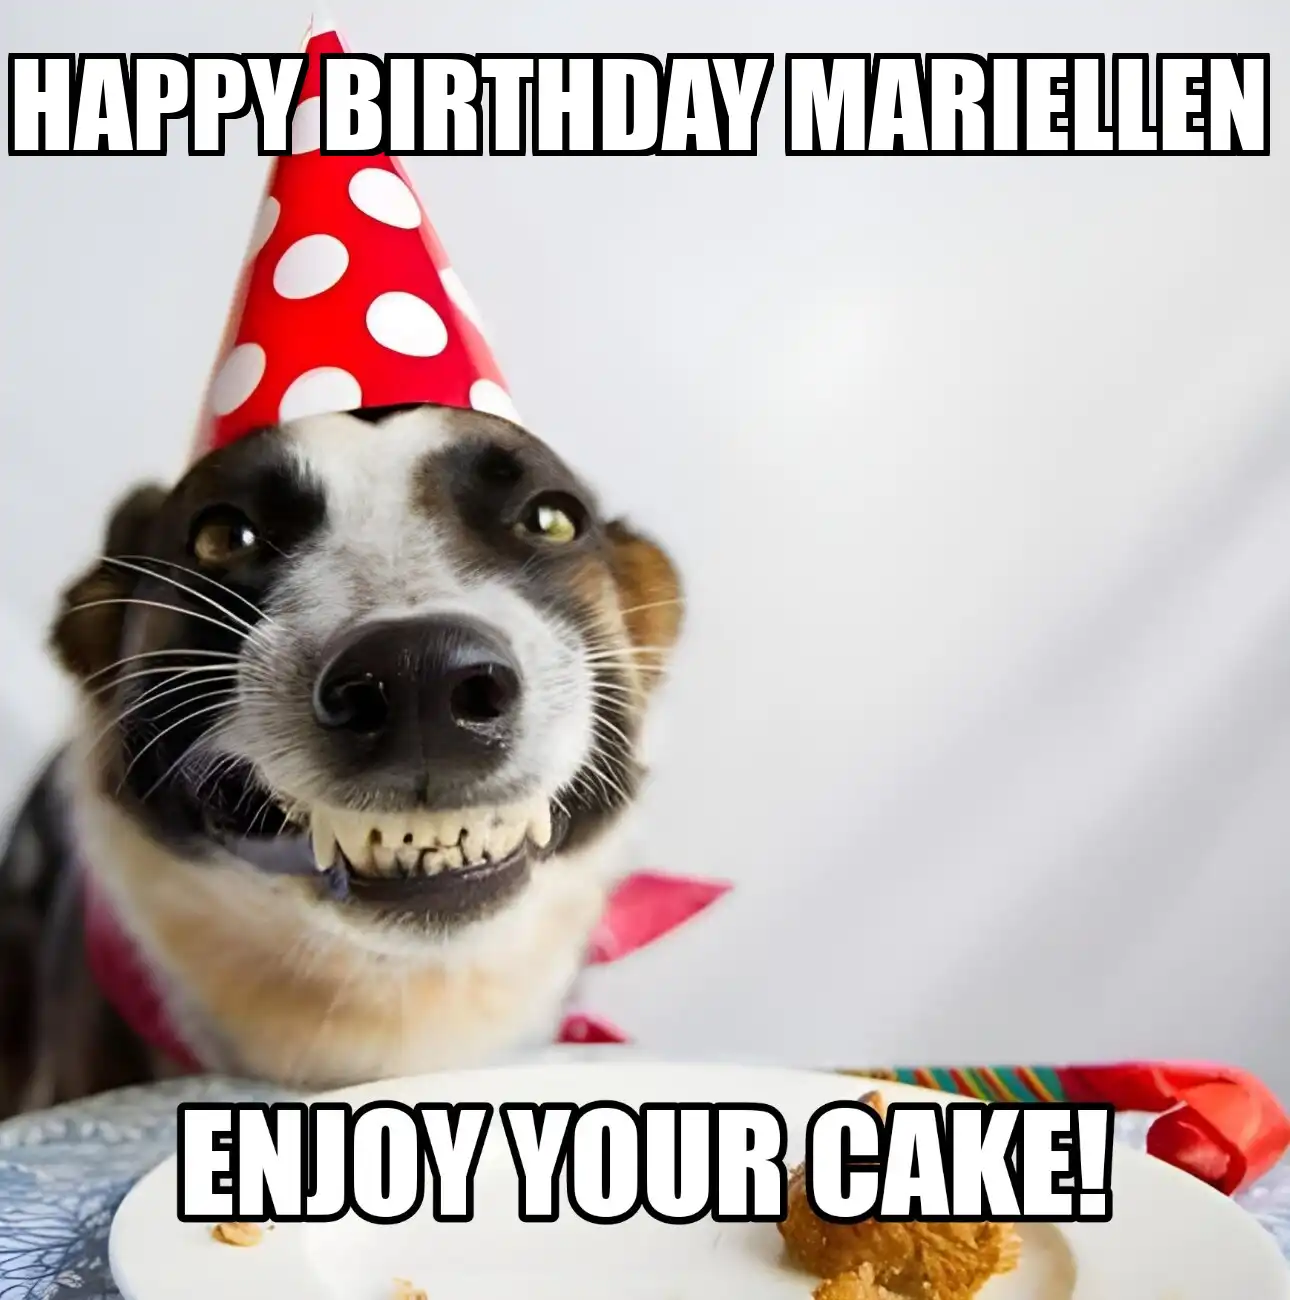 Happy Birthday Mariellen Enjoy Your Cake Dog Meme